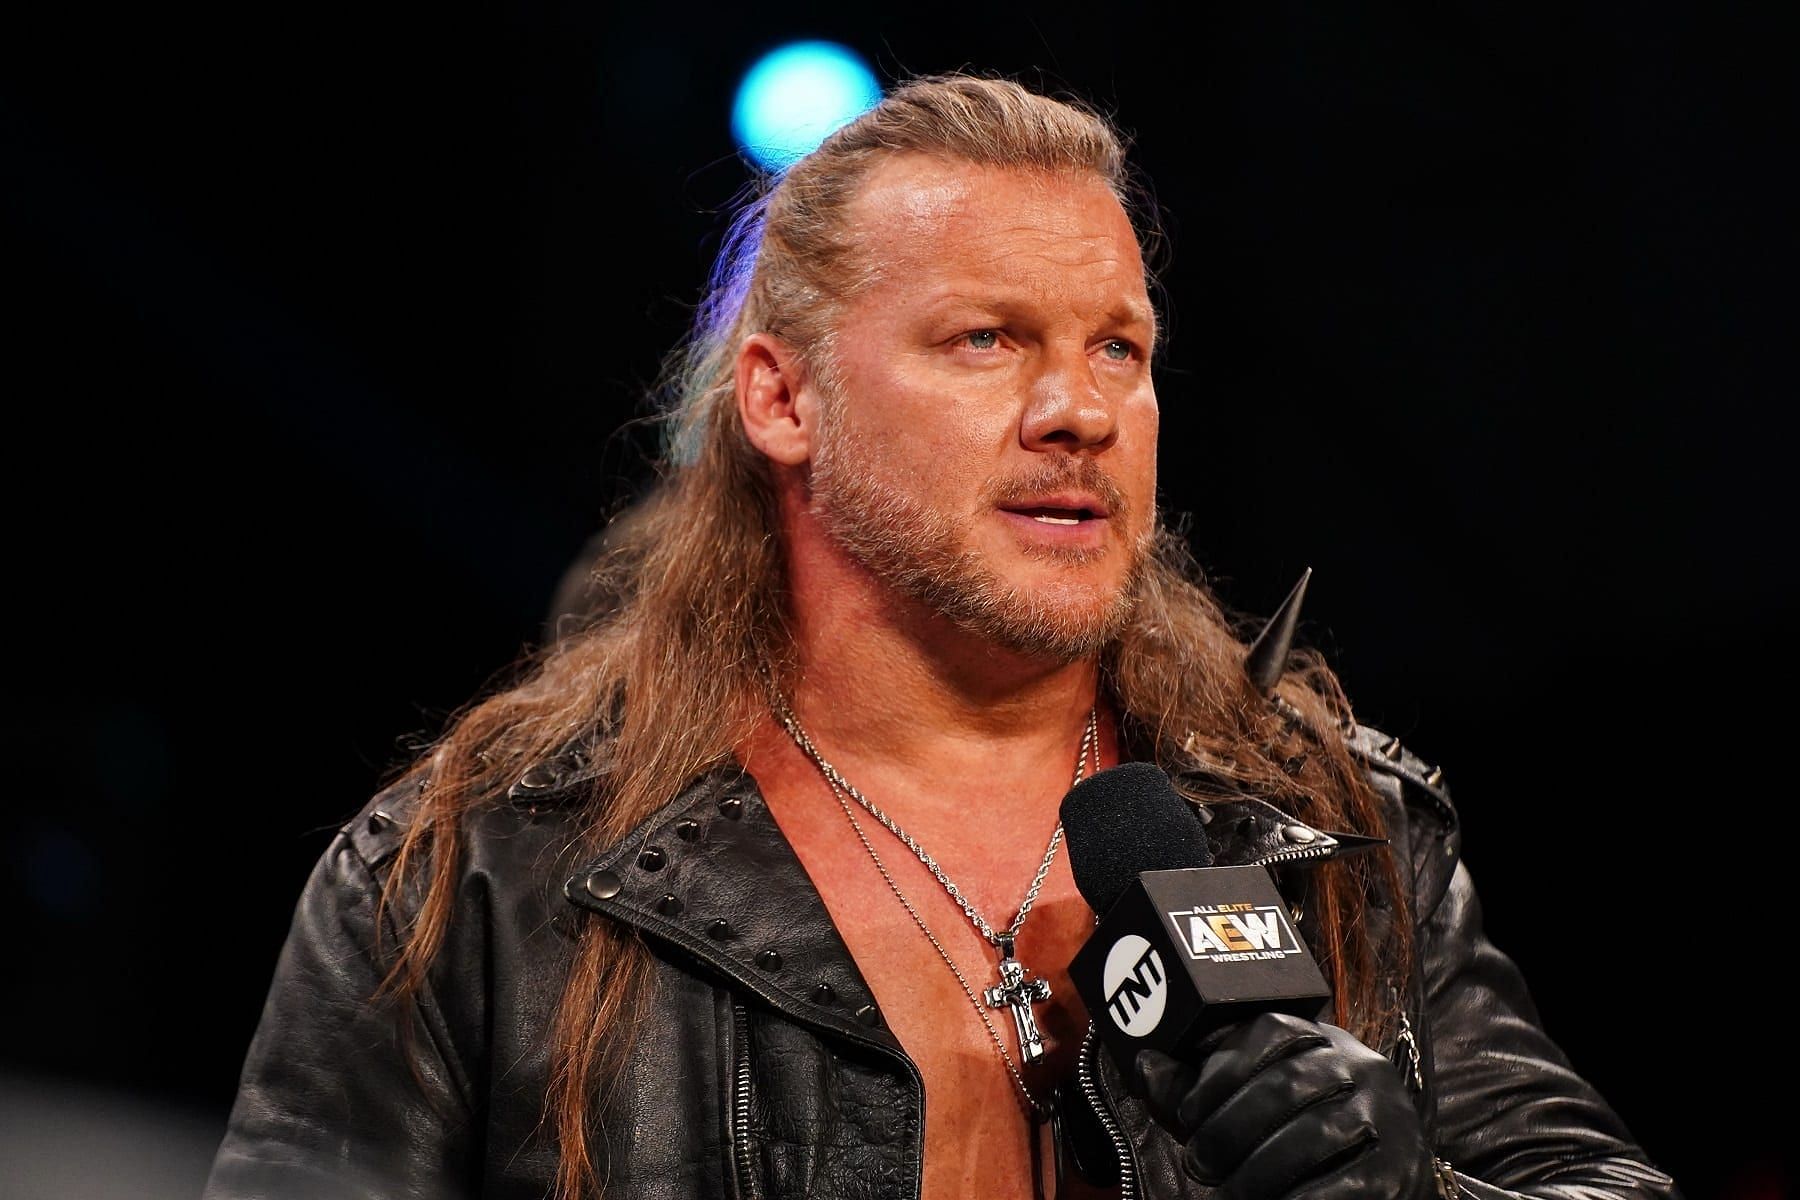 AEW Star Chris Jericho cut a promo at Dynamite